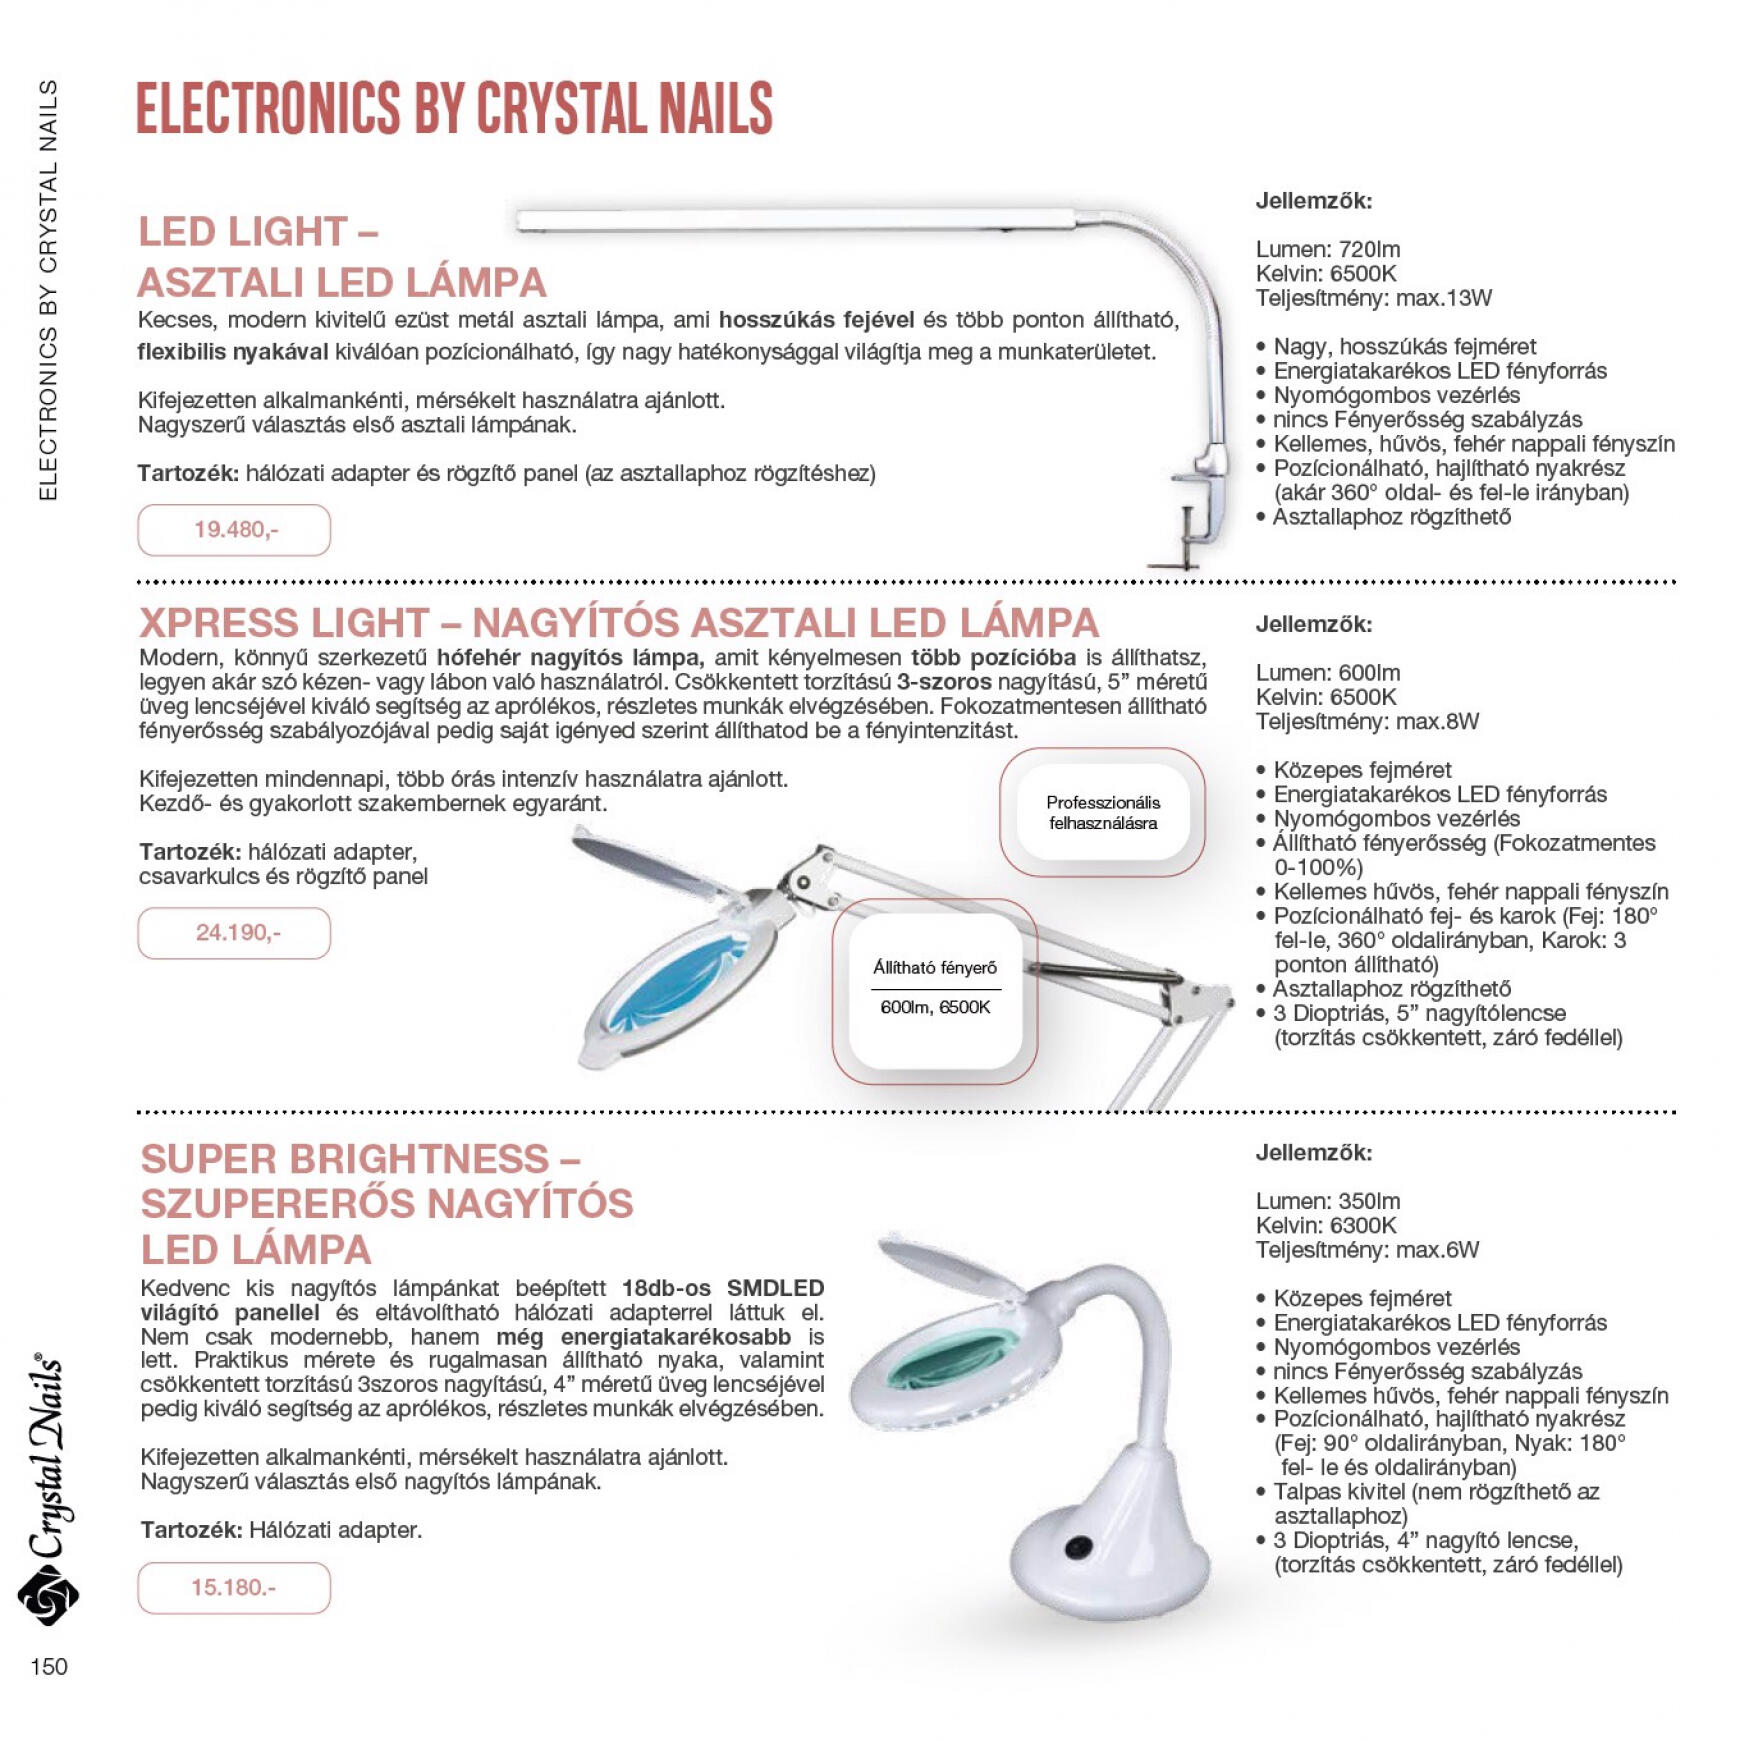 crystal-nails - Aktuális újság Crystal Nails 05.01. - 12.31. - page: 150